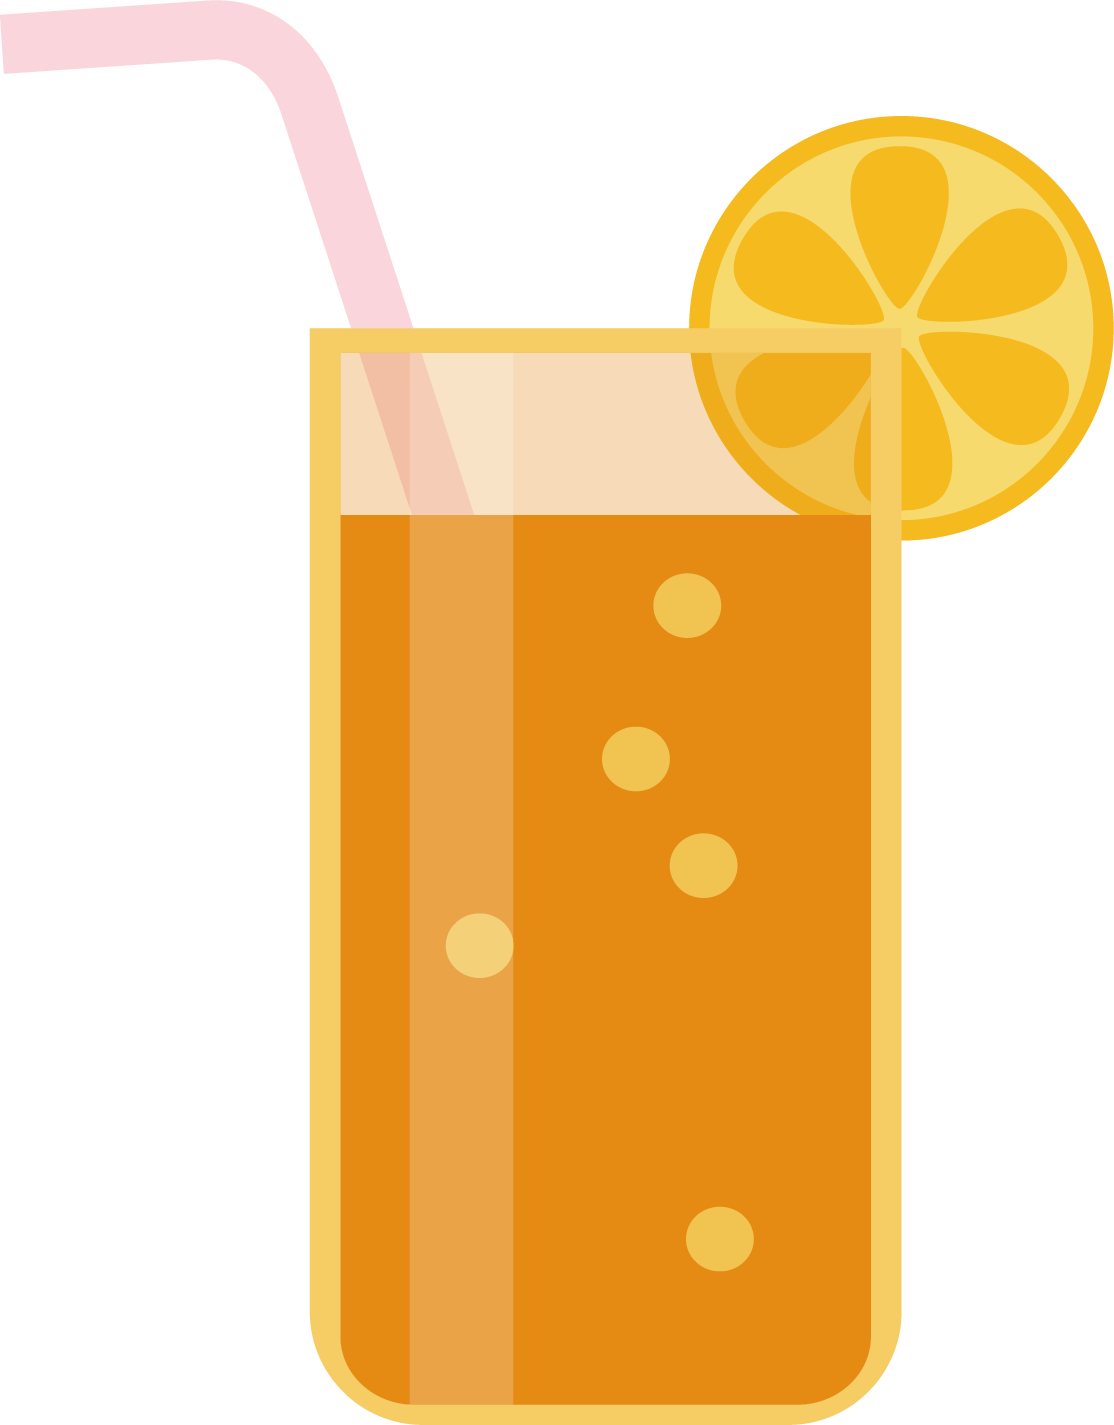 Orange Juice Orange Drink Lemonade - Orange Drink (1114x1425)